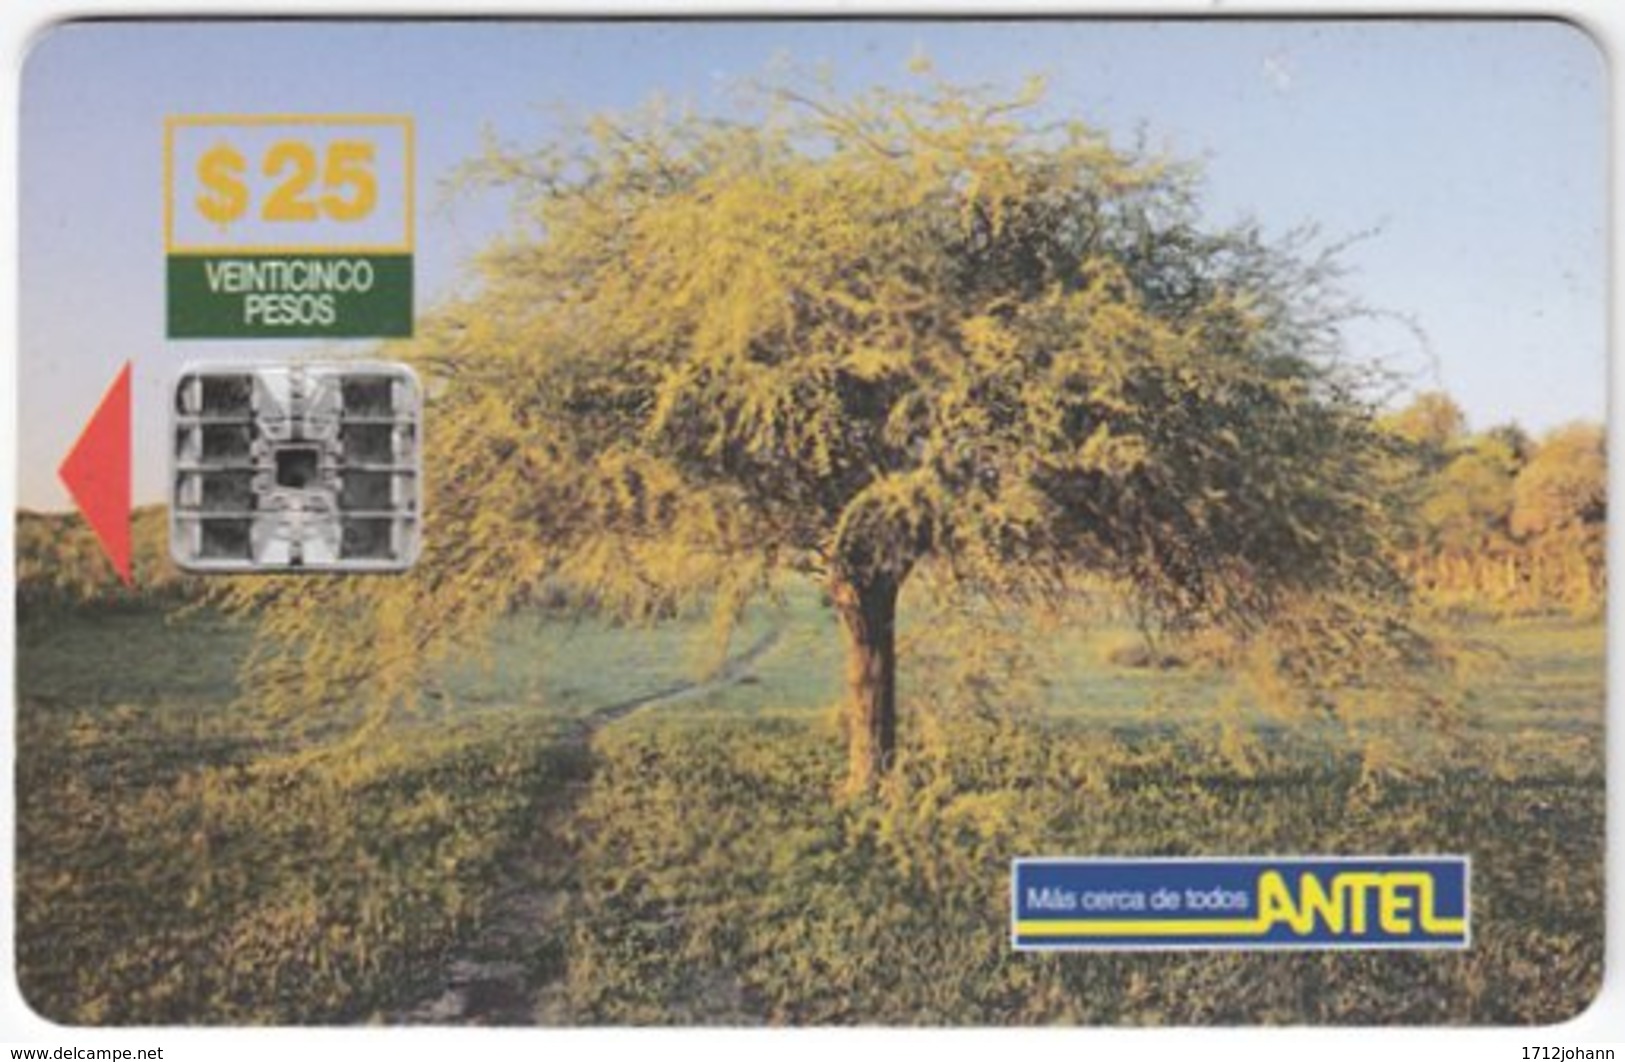 URUGUAY A-239 Chip Antel - Plant, Tree - Used - Uruguay